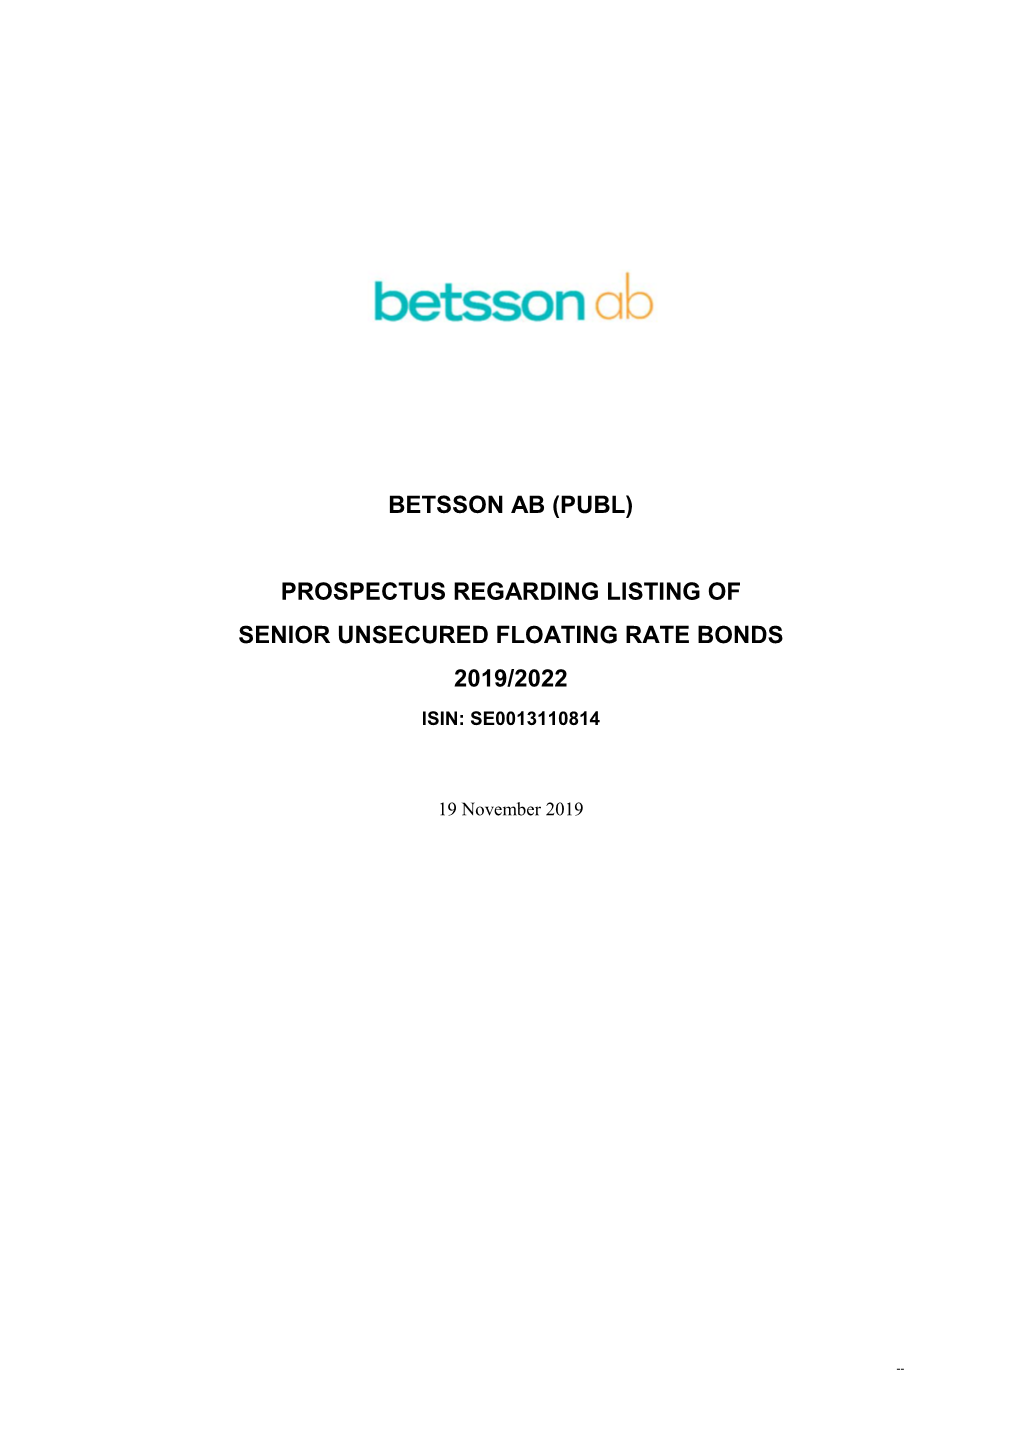 Betsson Ab (Publ) Prospectus Regarding Listing of Senior Unsecured Floating Rate Bonds 2019/2022